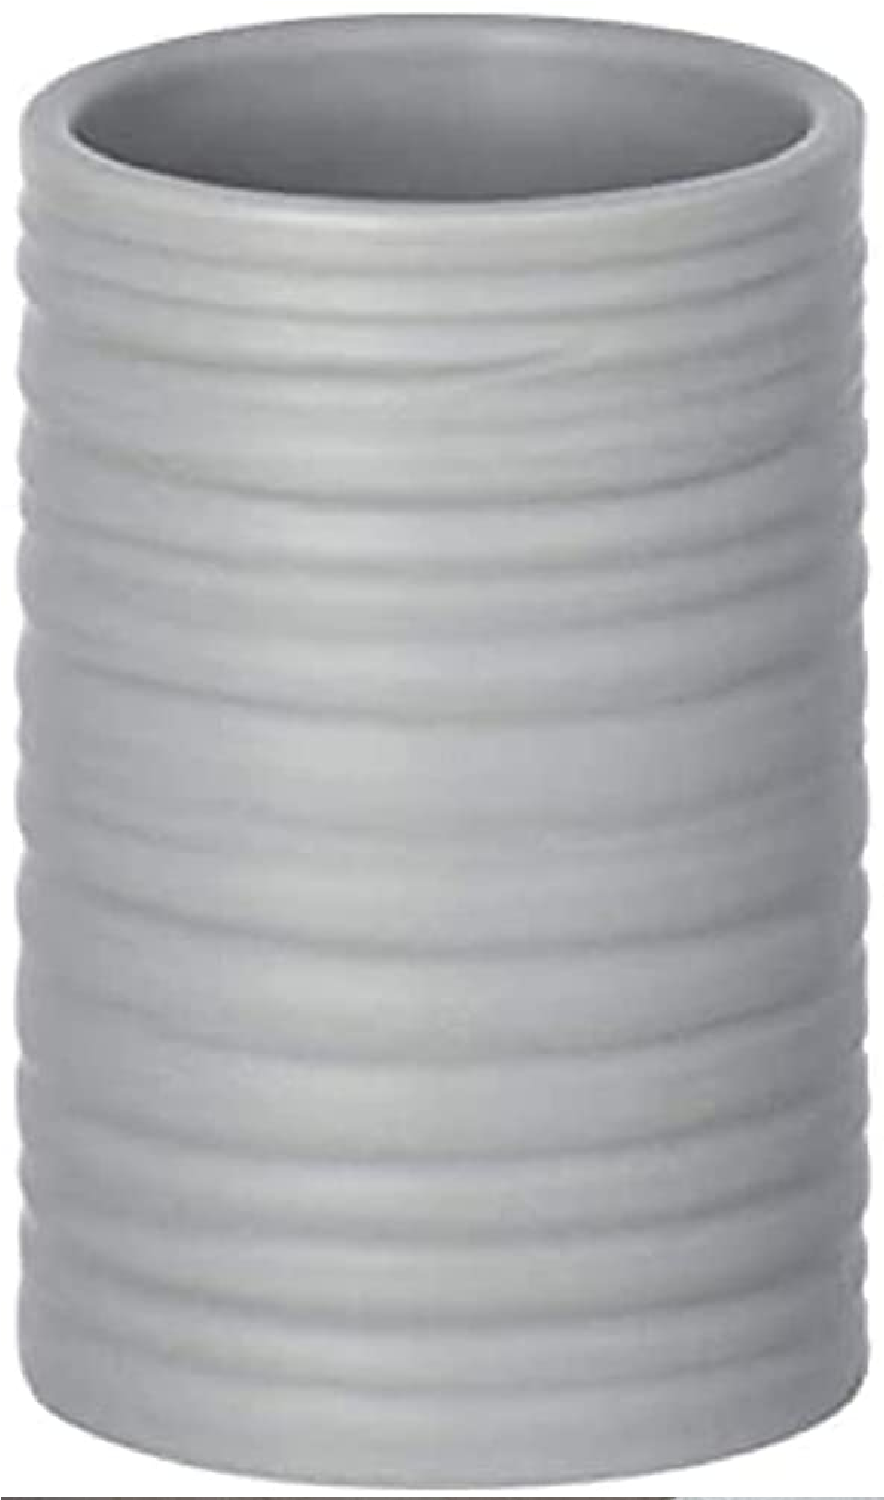 Zahnputzbecher Mila Grau Keramik - Zahnbürstenhalter für Zahnbürste und Zahnpasta, Keramik, 6.5 x 10.5 x 6.5 cm, Grau